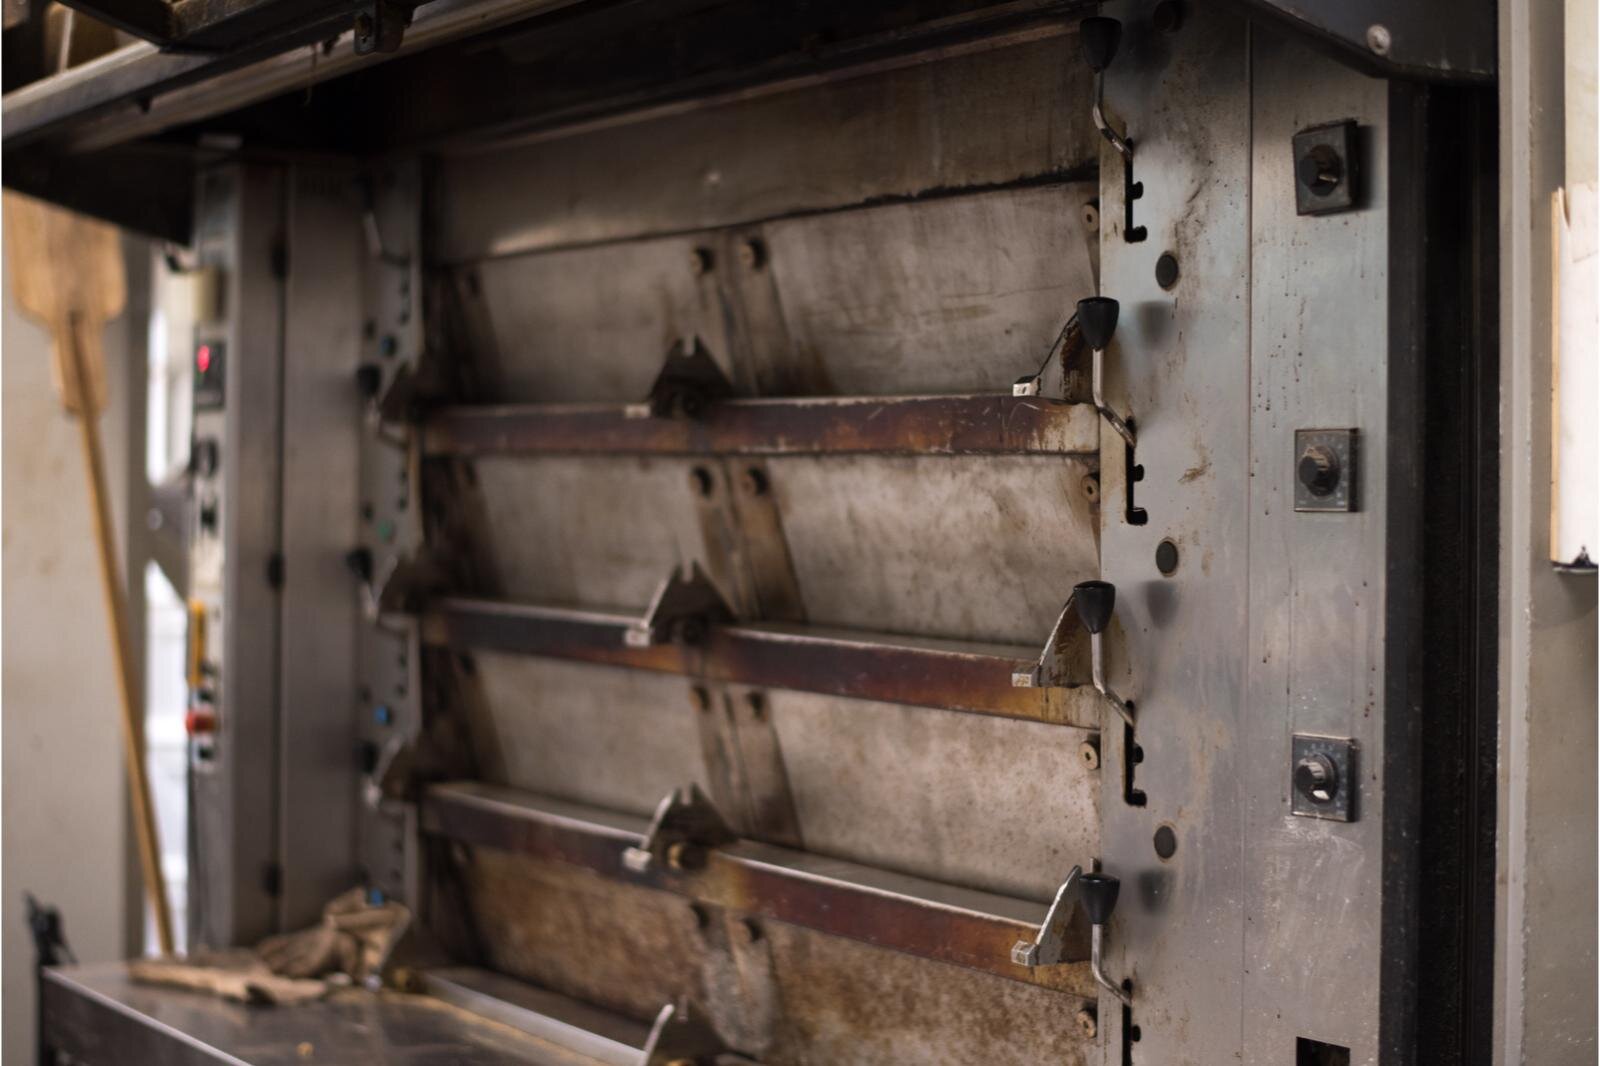 Where the magic happens: the massive ovens at Sarkozy's Bakery.